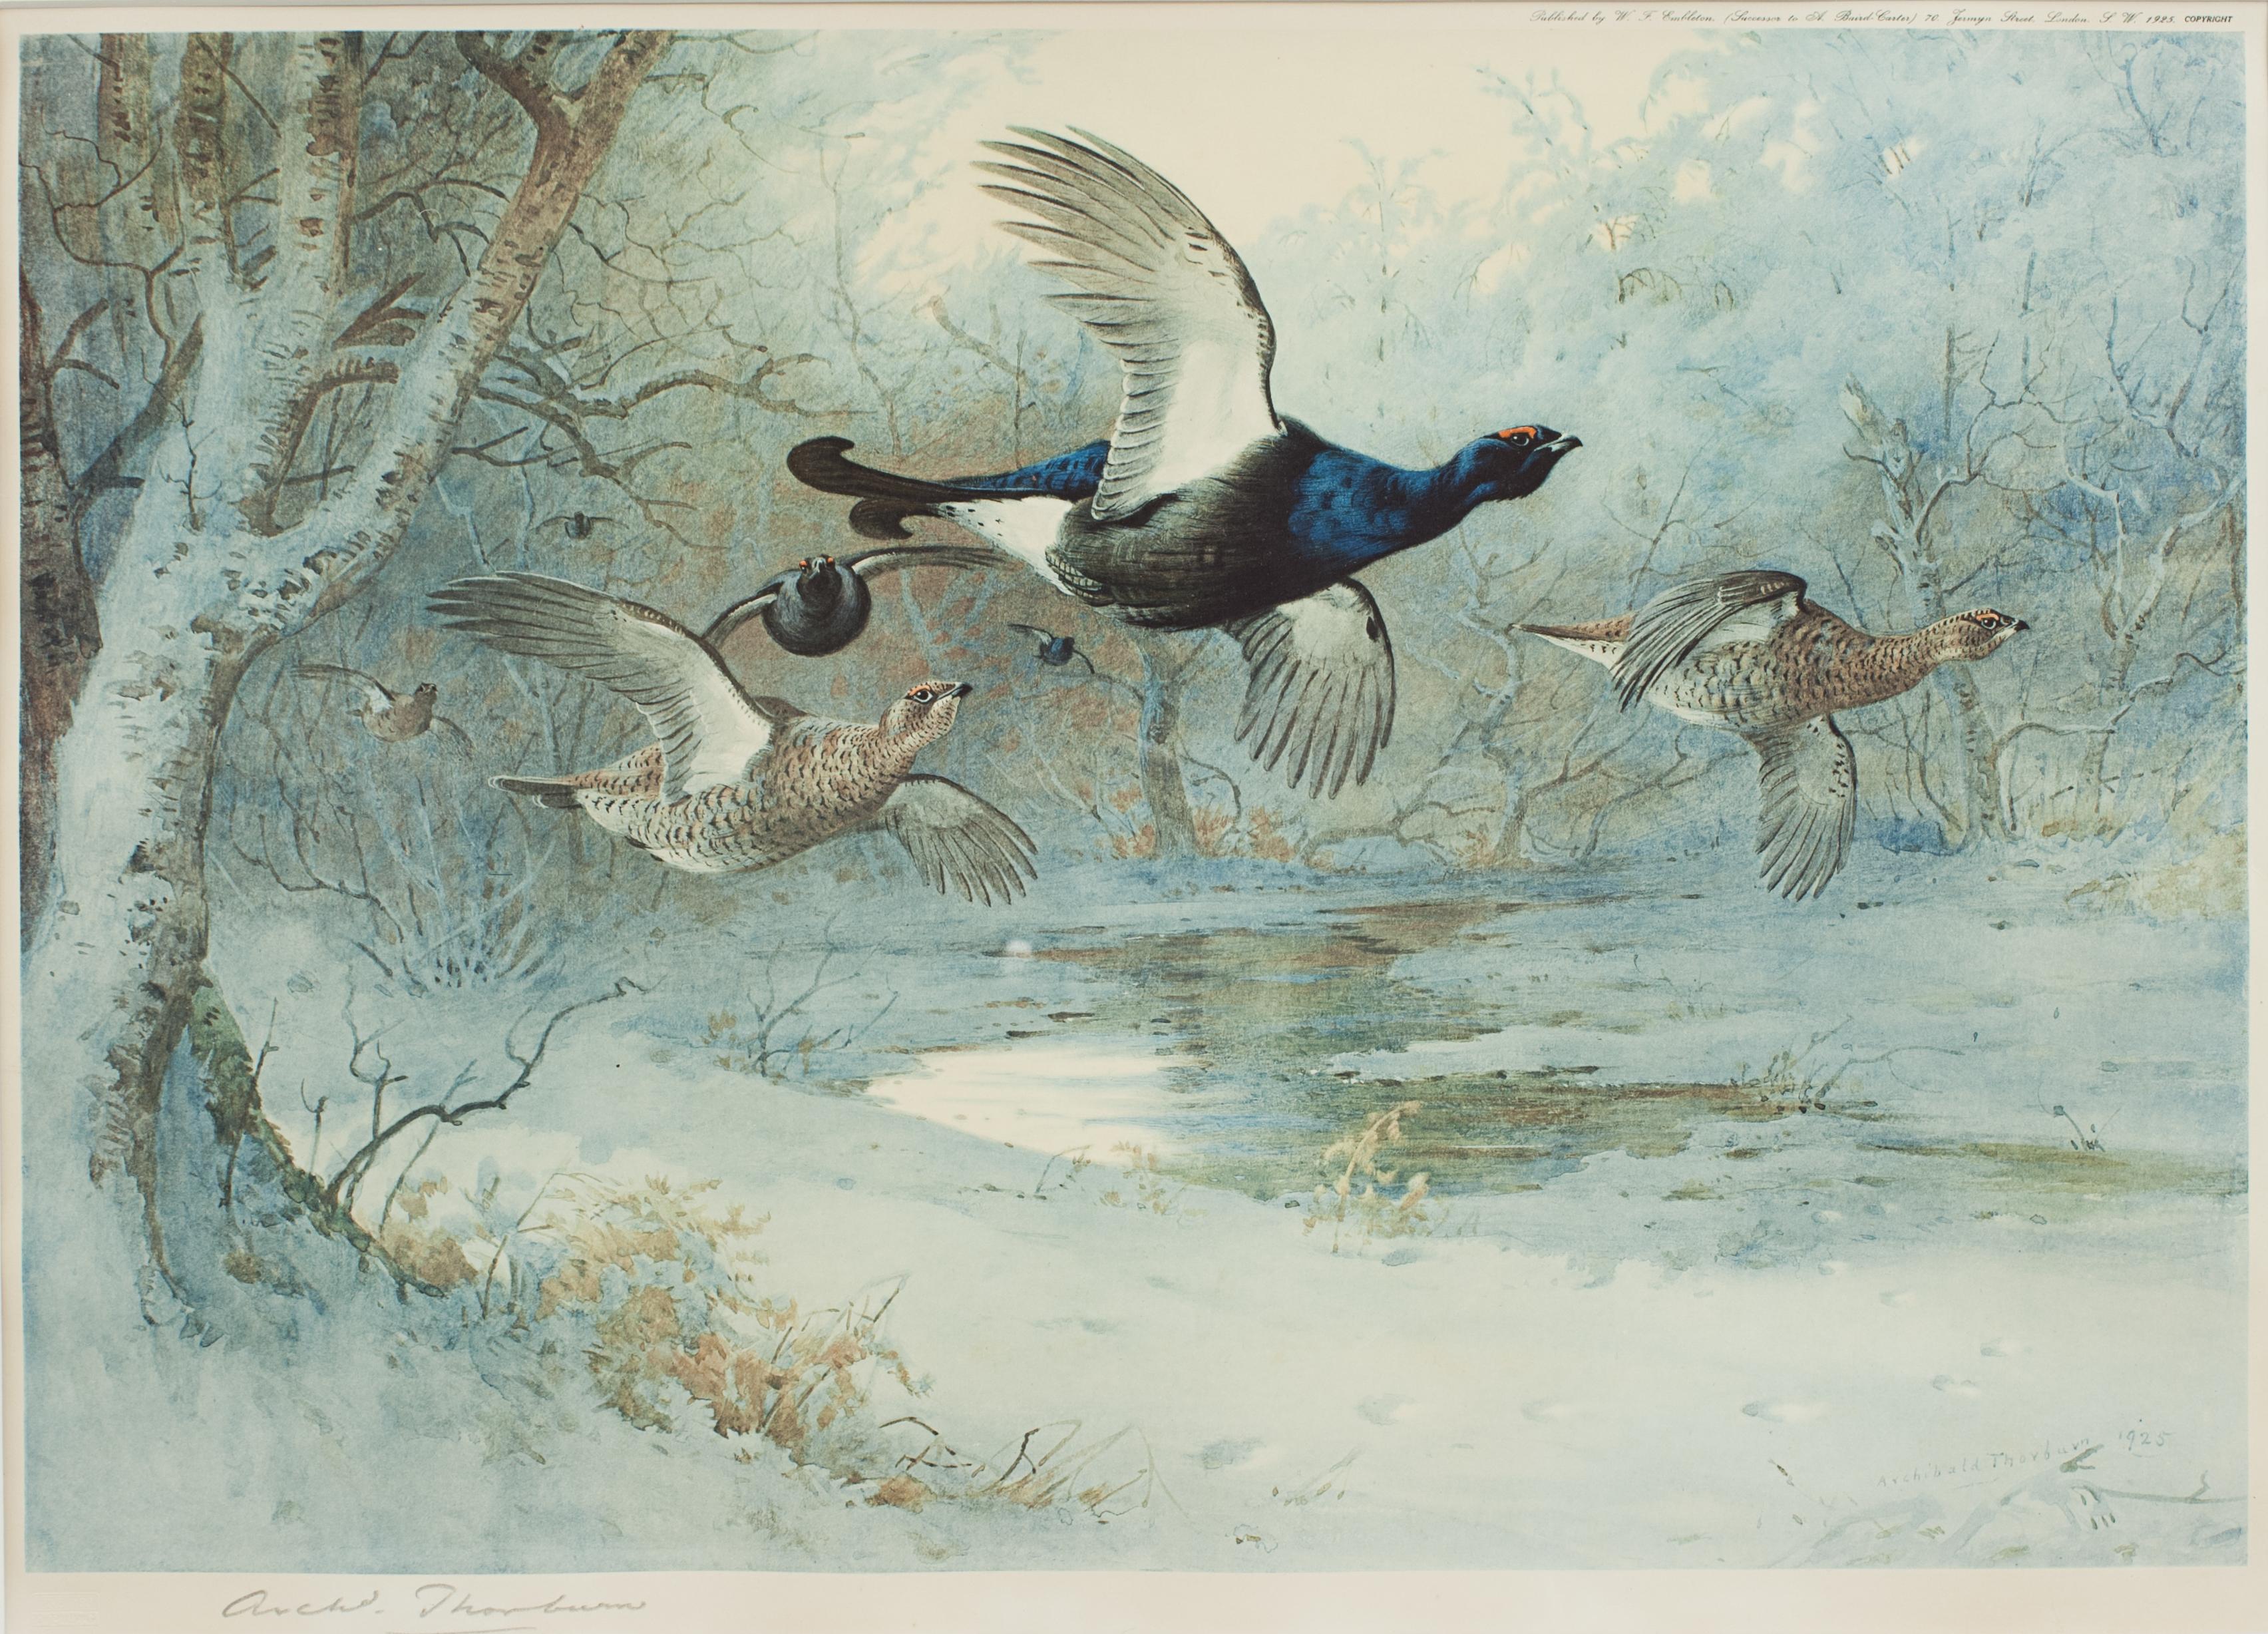 Sporting Art Antique Shooting Print, Game Birds by Archibald Thorburn, Winter, Pub, 1925